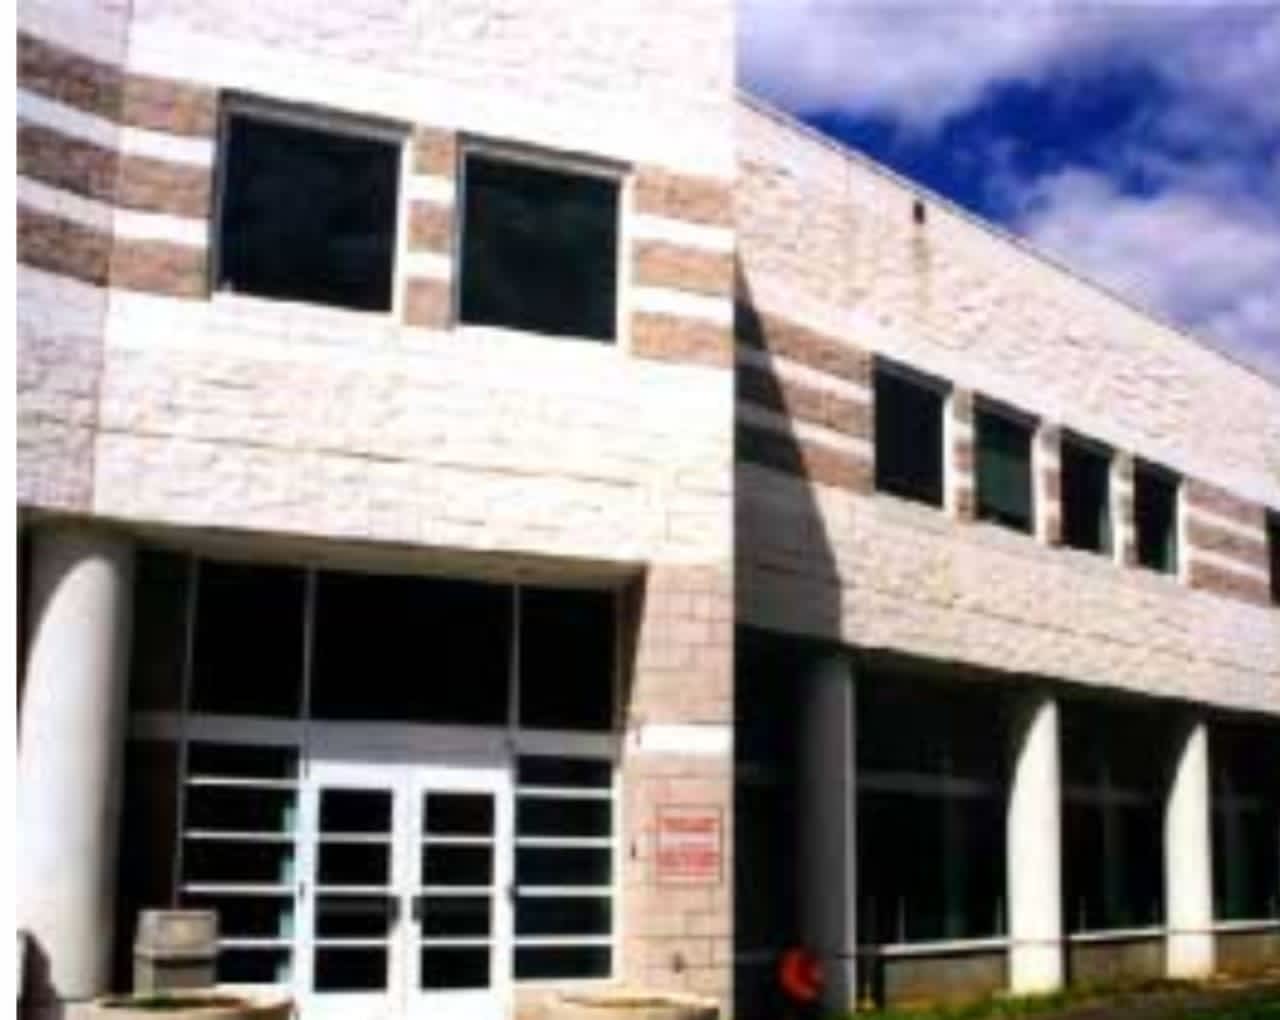 The Corrigan-Radgowski Correctional Center in Connecticut.